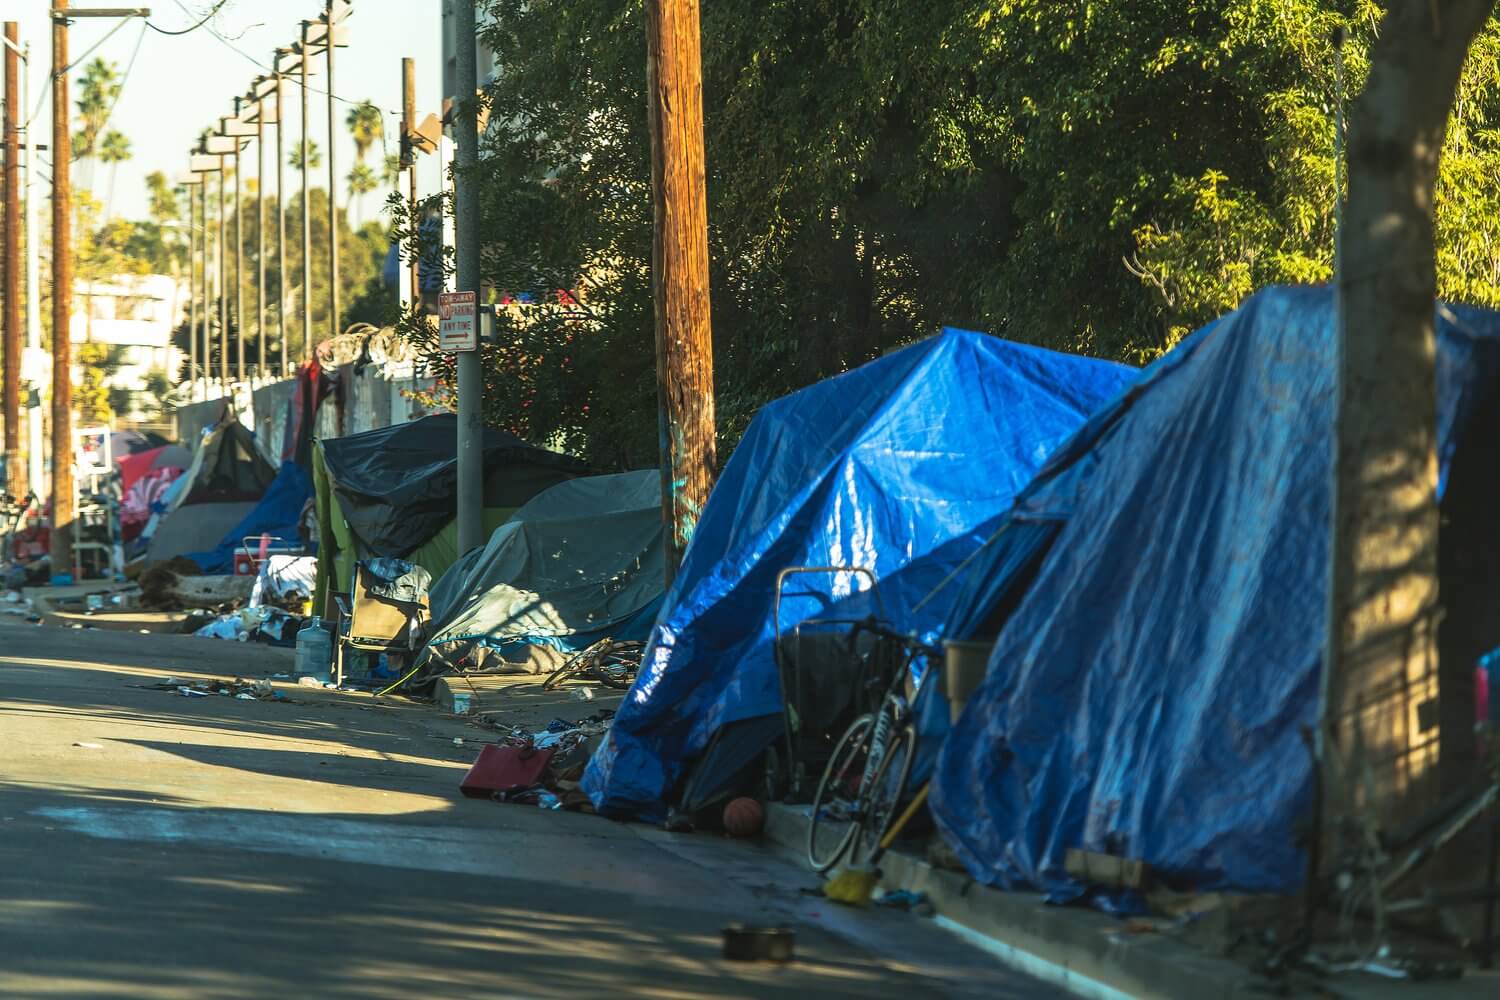 Homeless tents on sidewalk